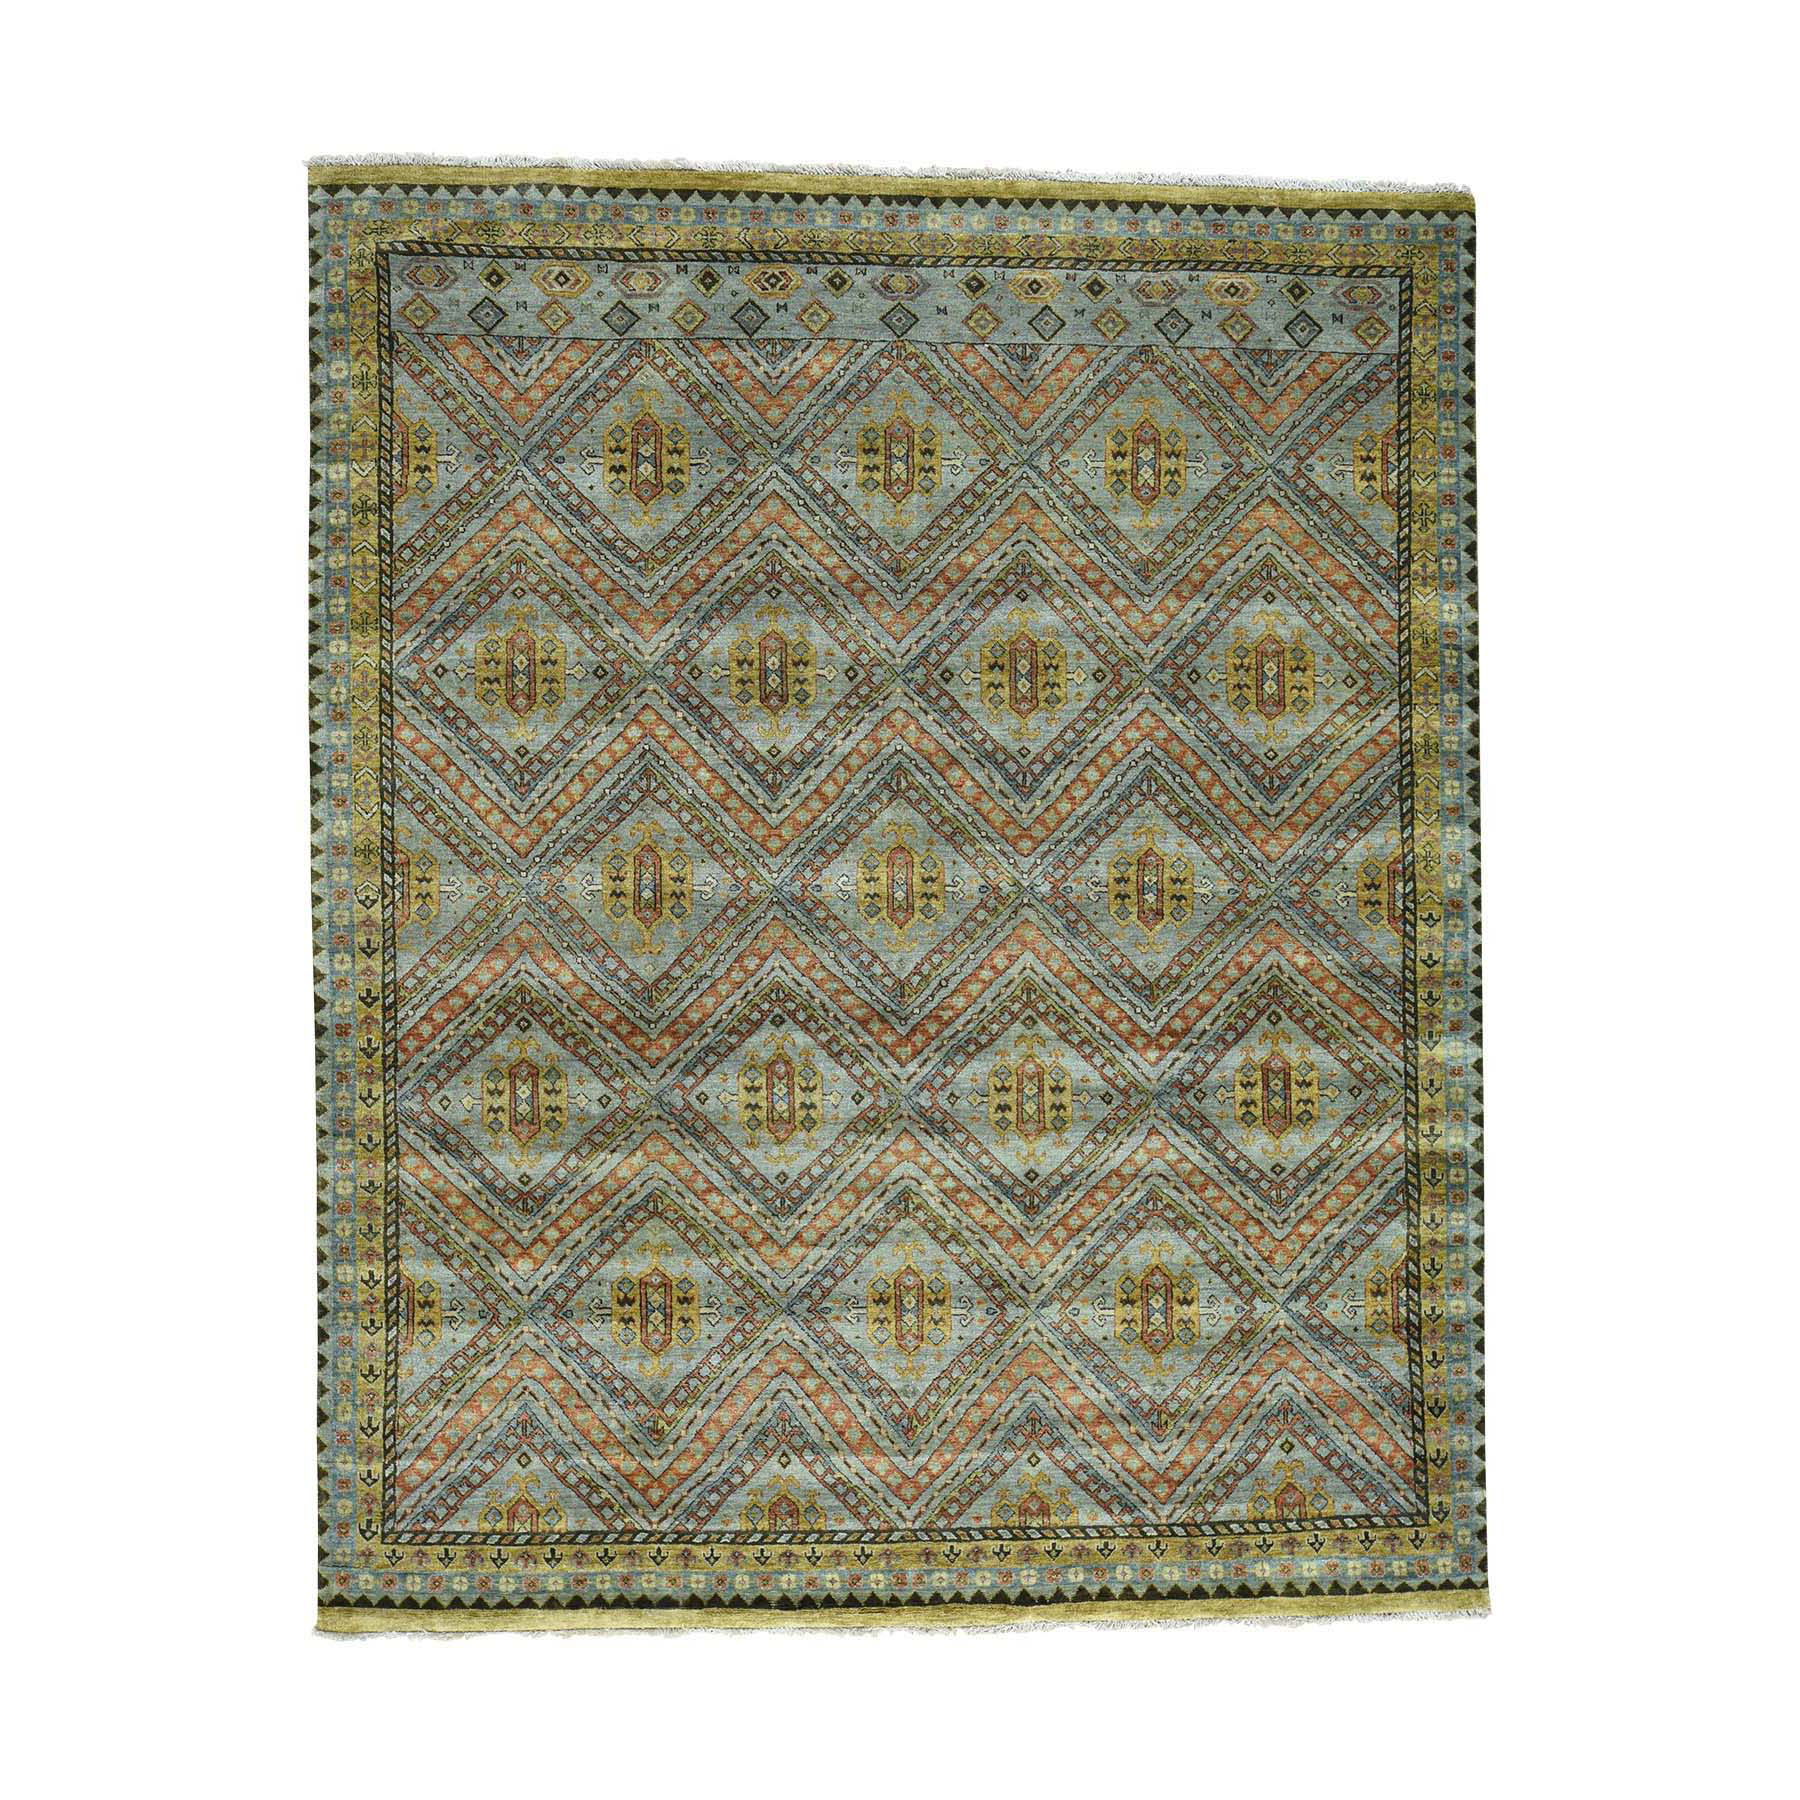 8'x9'9" Hand Woven Qashqai Design Wool and Silk Oriental Rug 